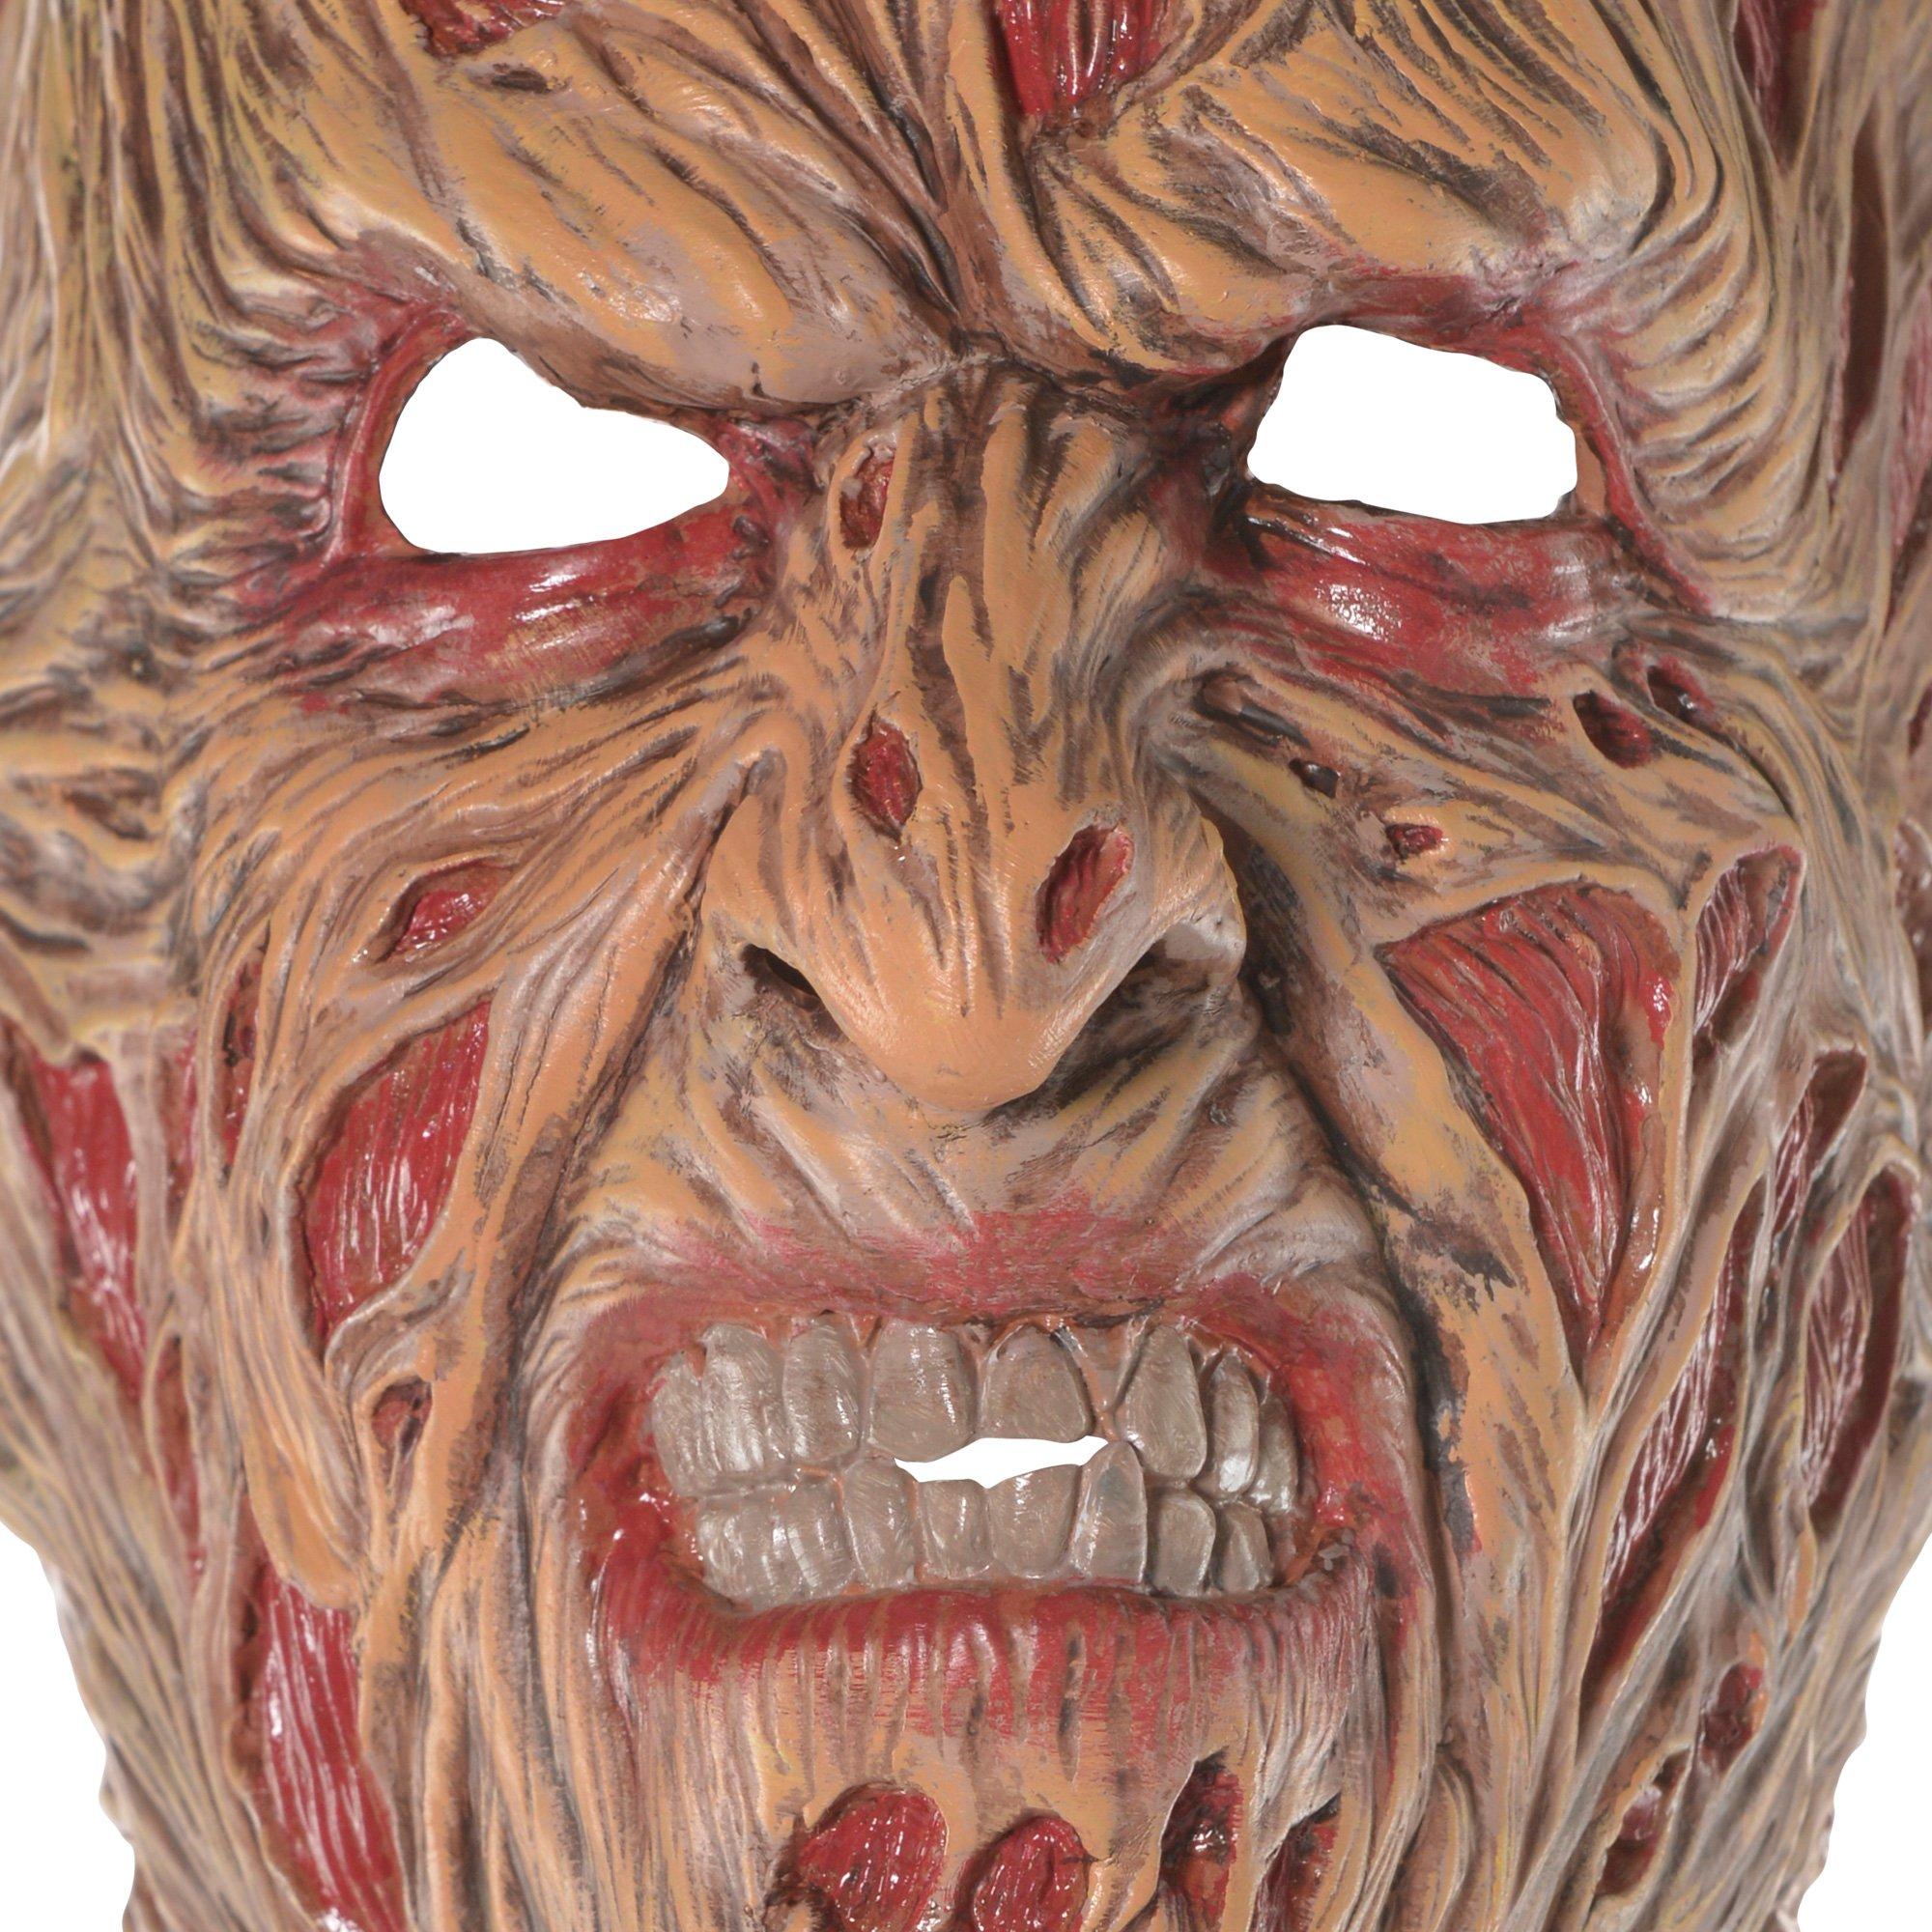 Freddy Krueger Mask - Nightmare on Elm Street